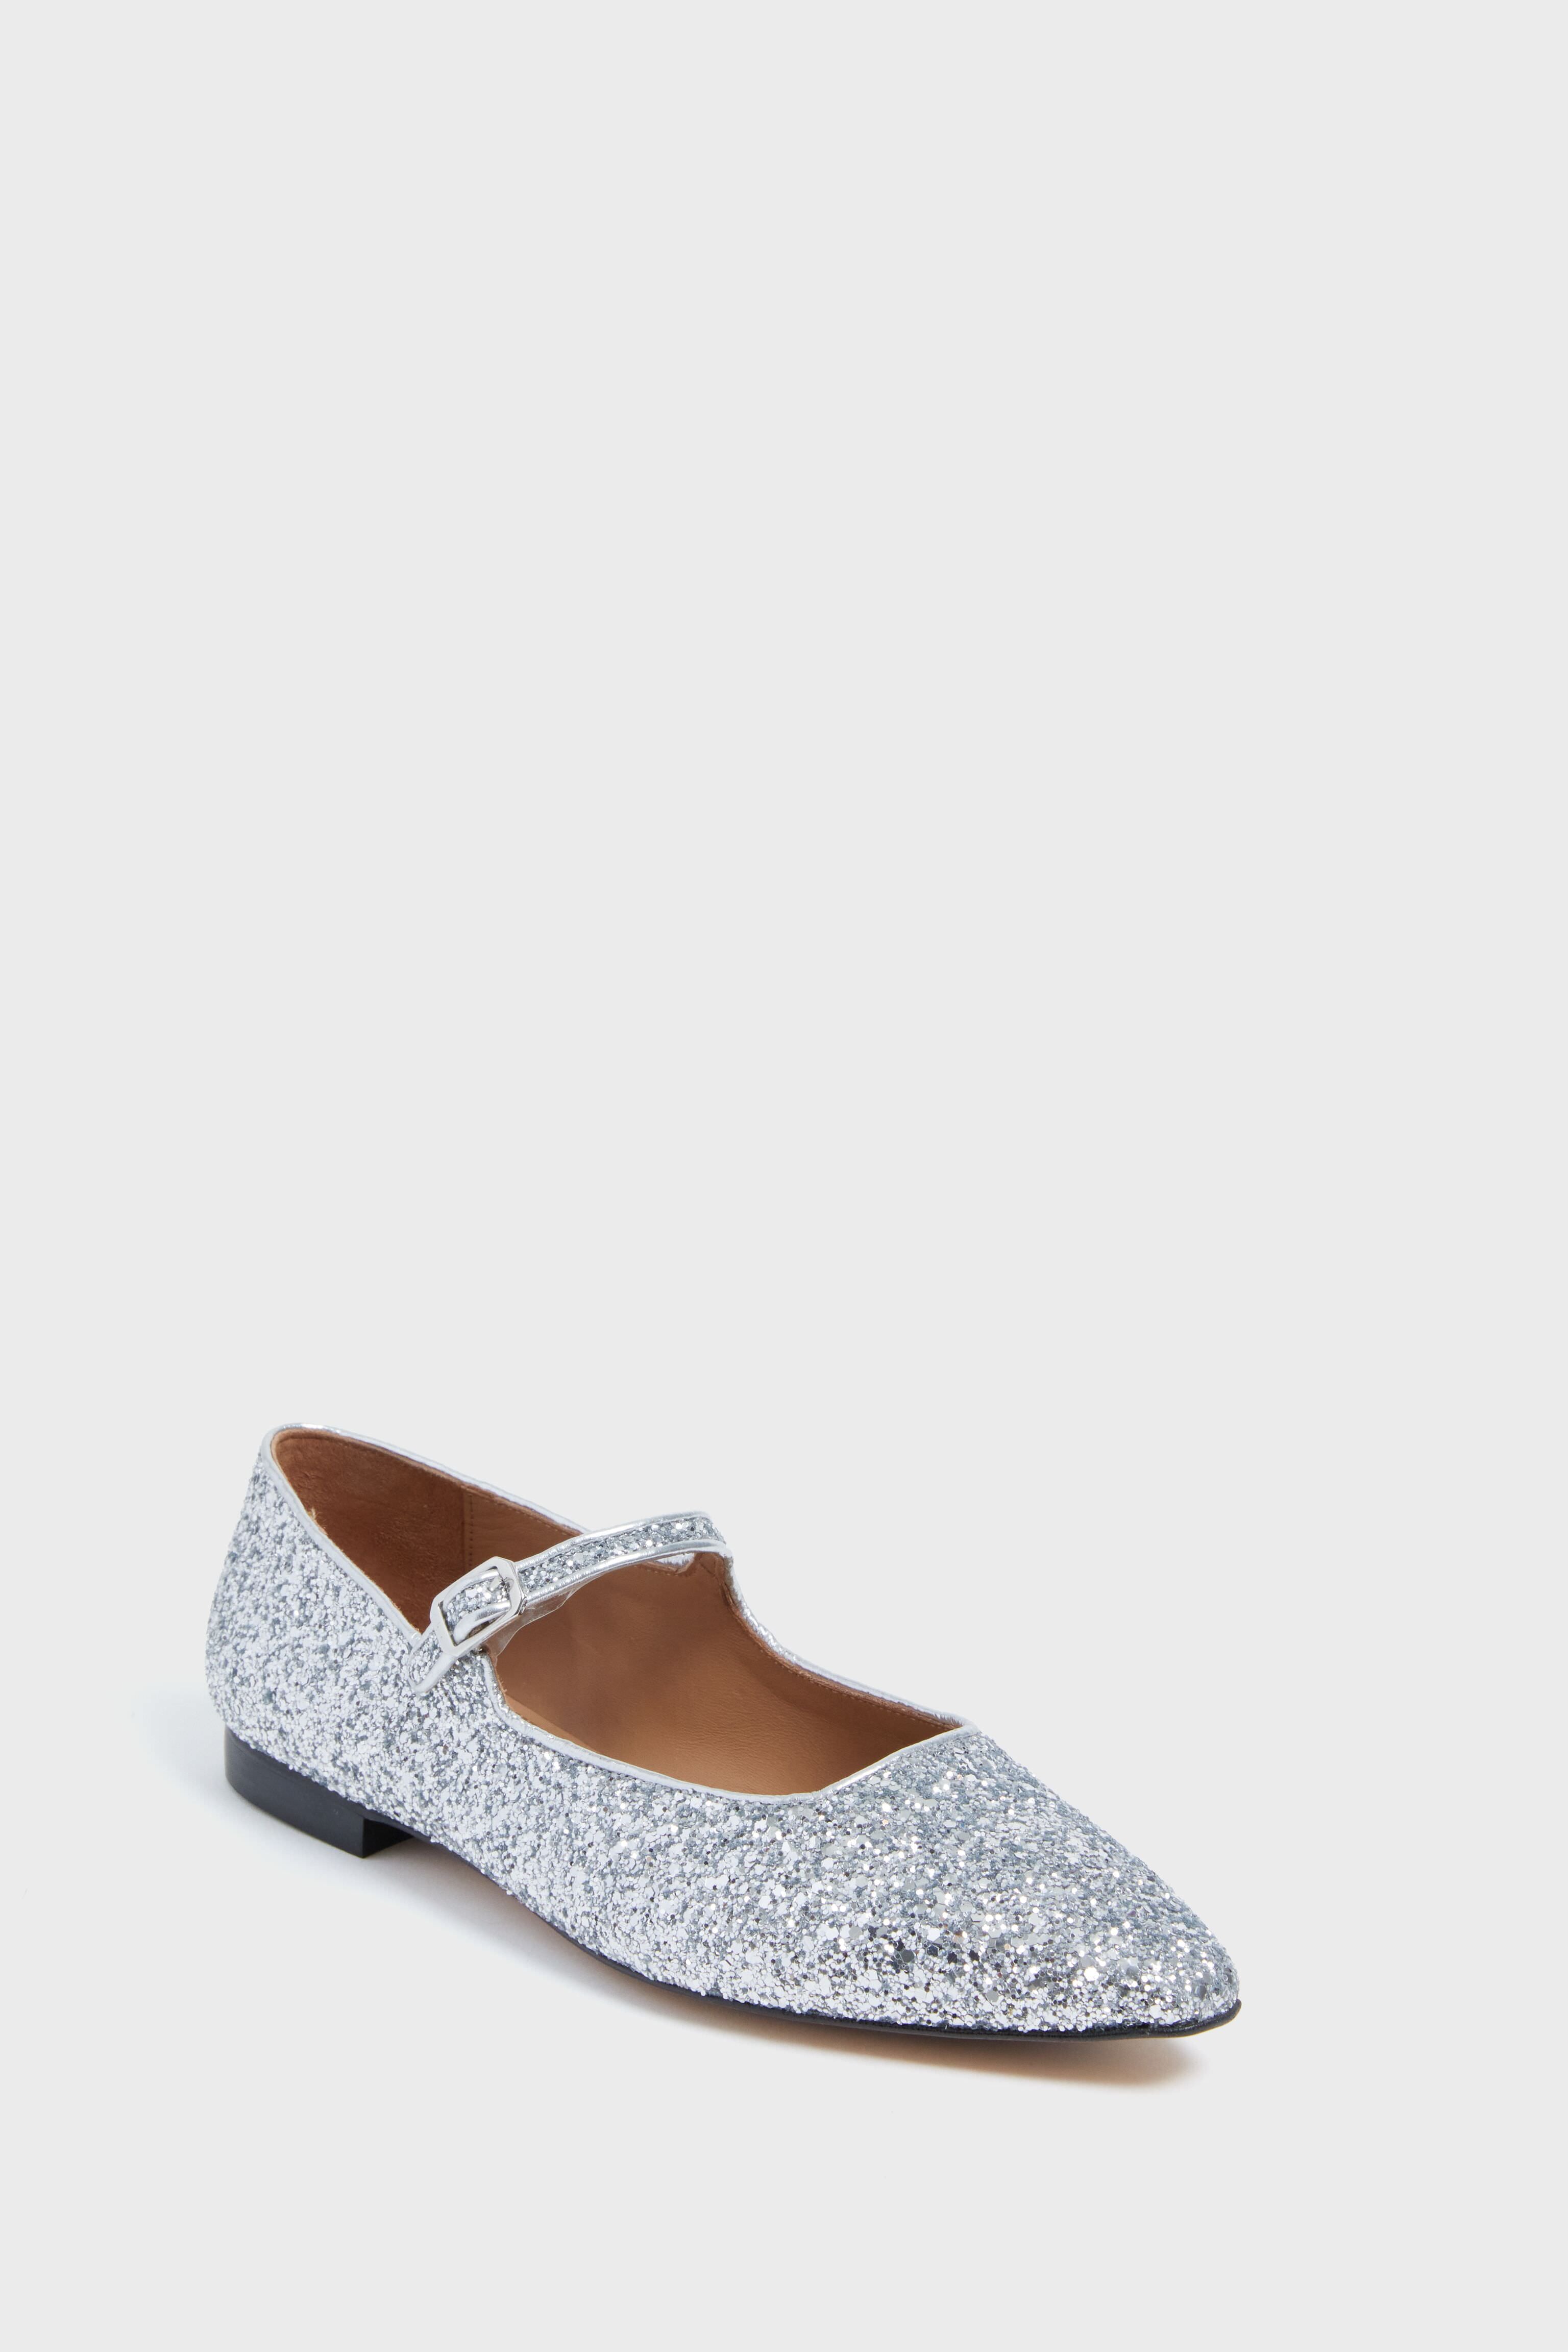 Silver Glitter Camila Flats | Flattered